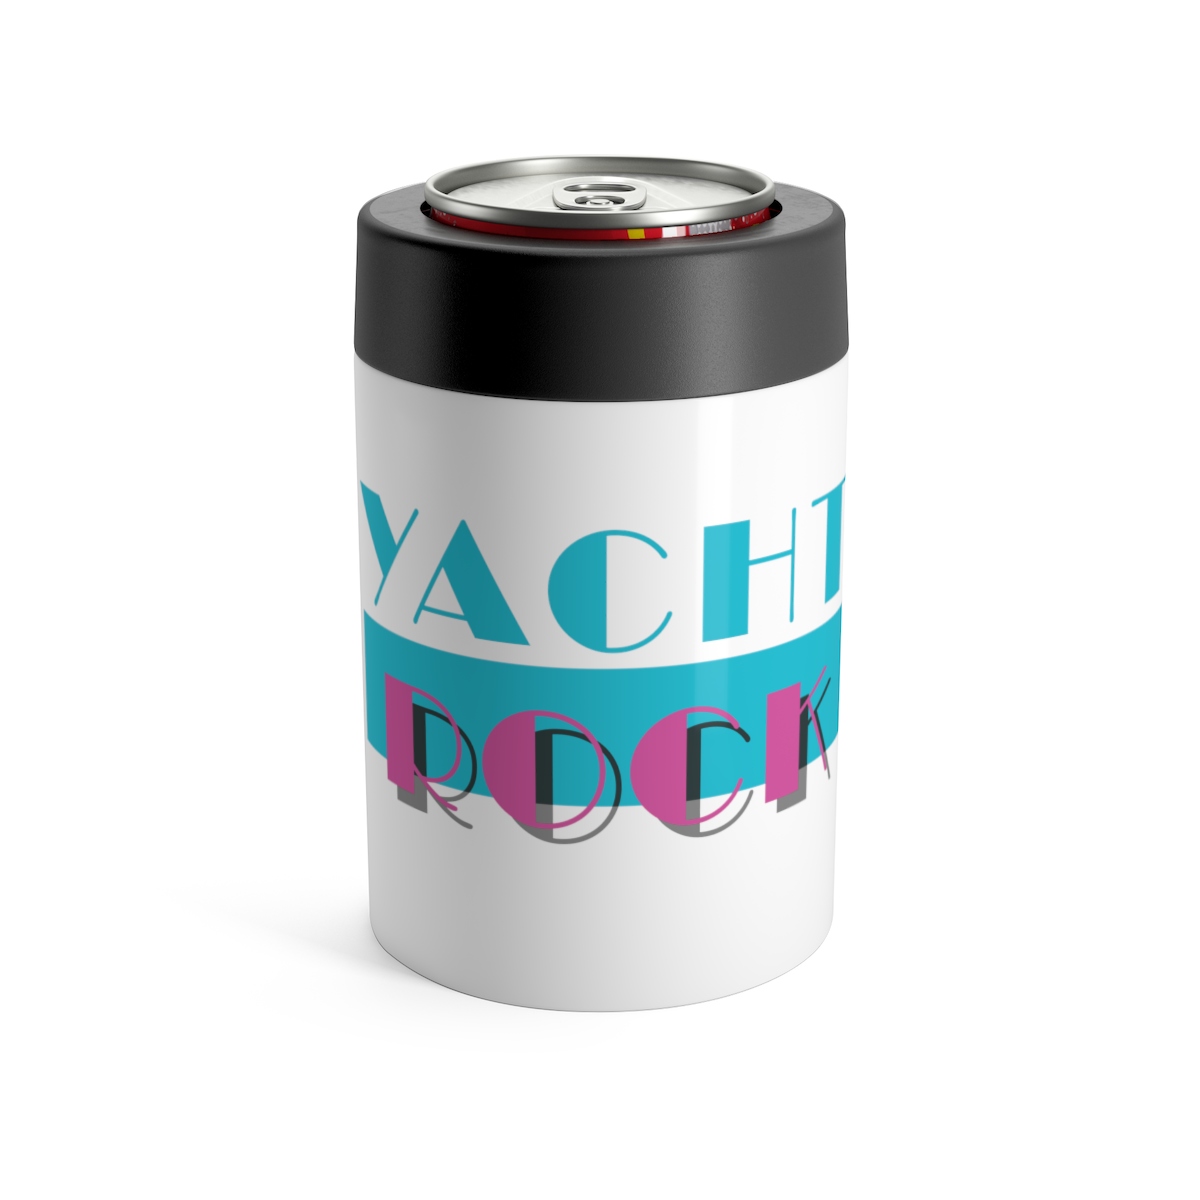 yacht rock drinks